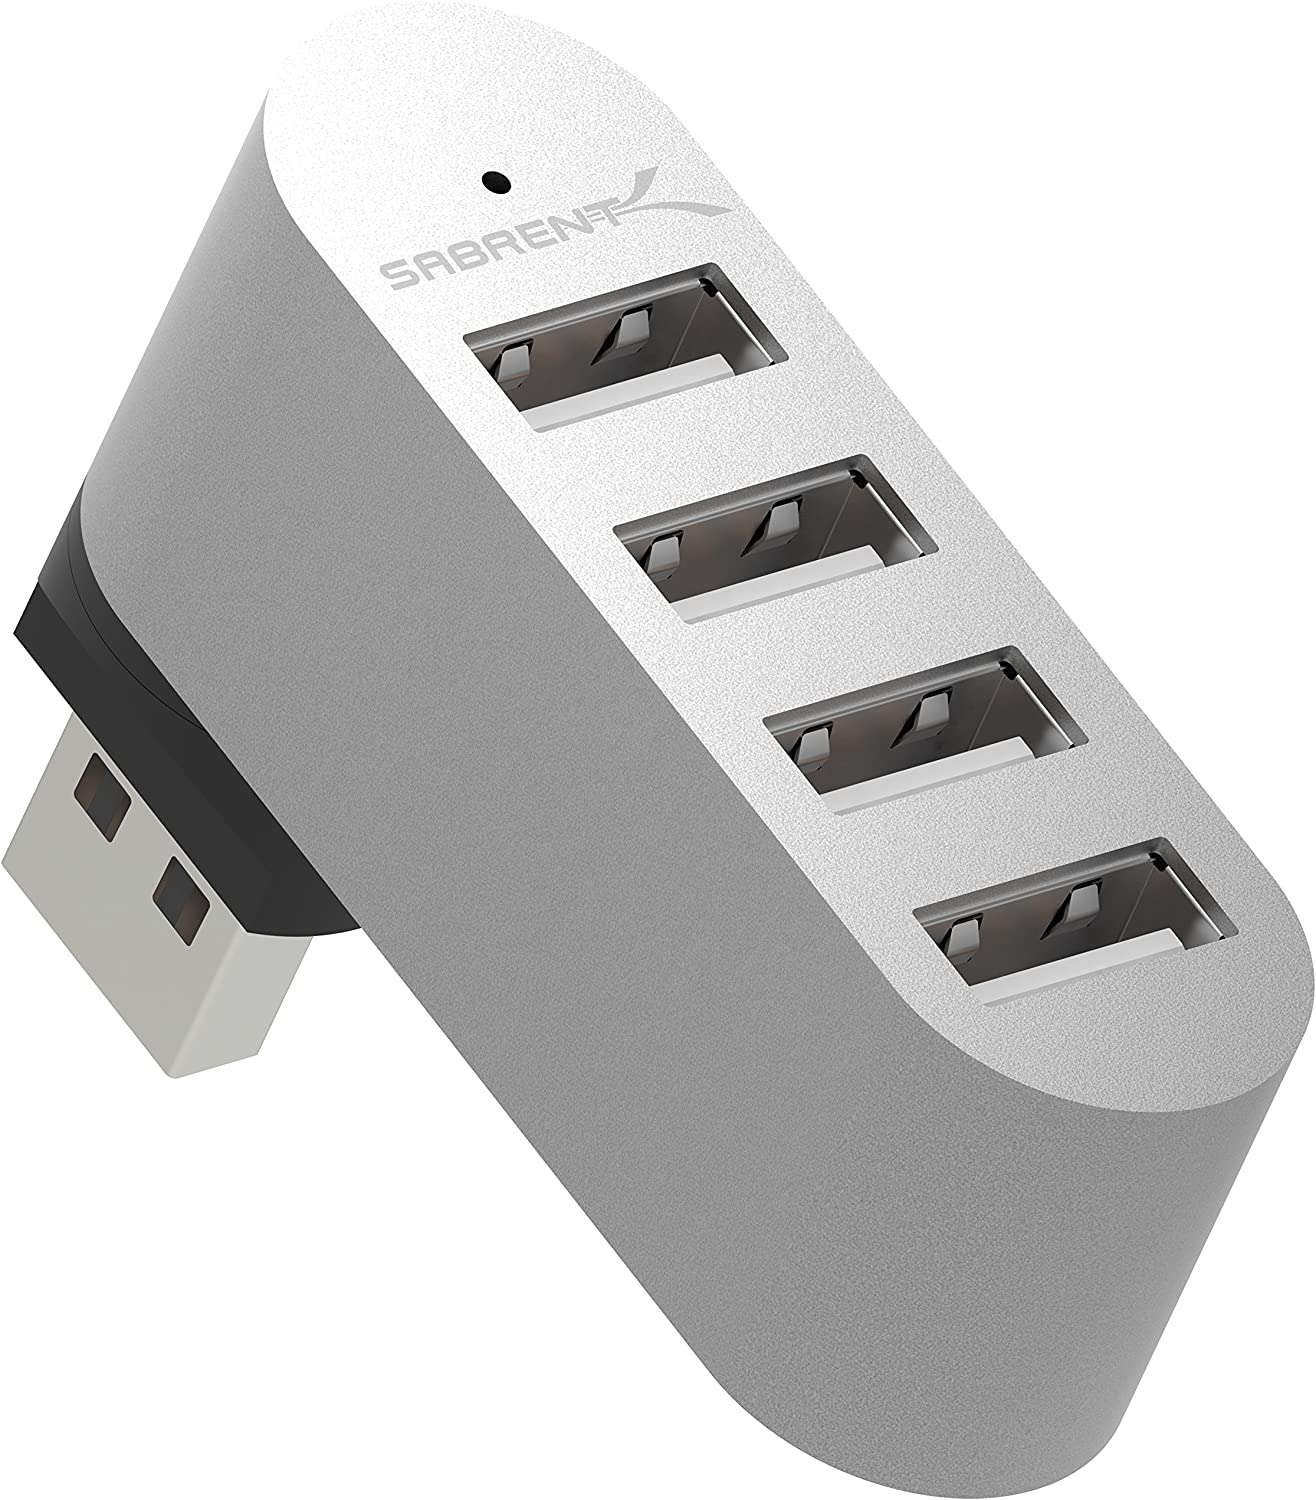 SABRENT Premium 4 Port Aluminum Mini USB 2.0 Hub [90°/180° Degree Rotatable] (HB-UMMC)